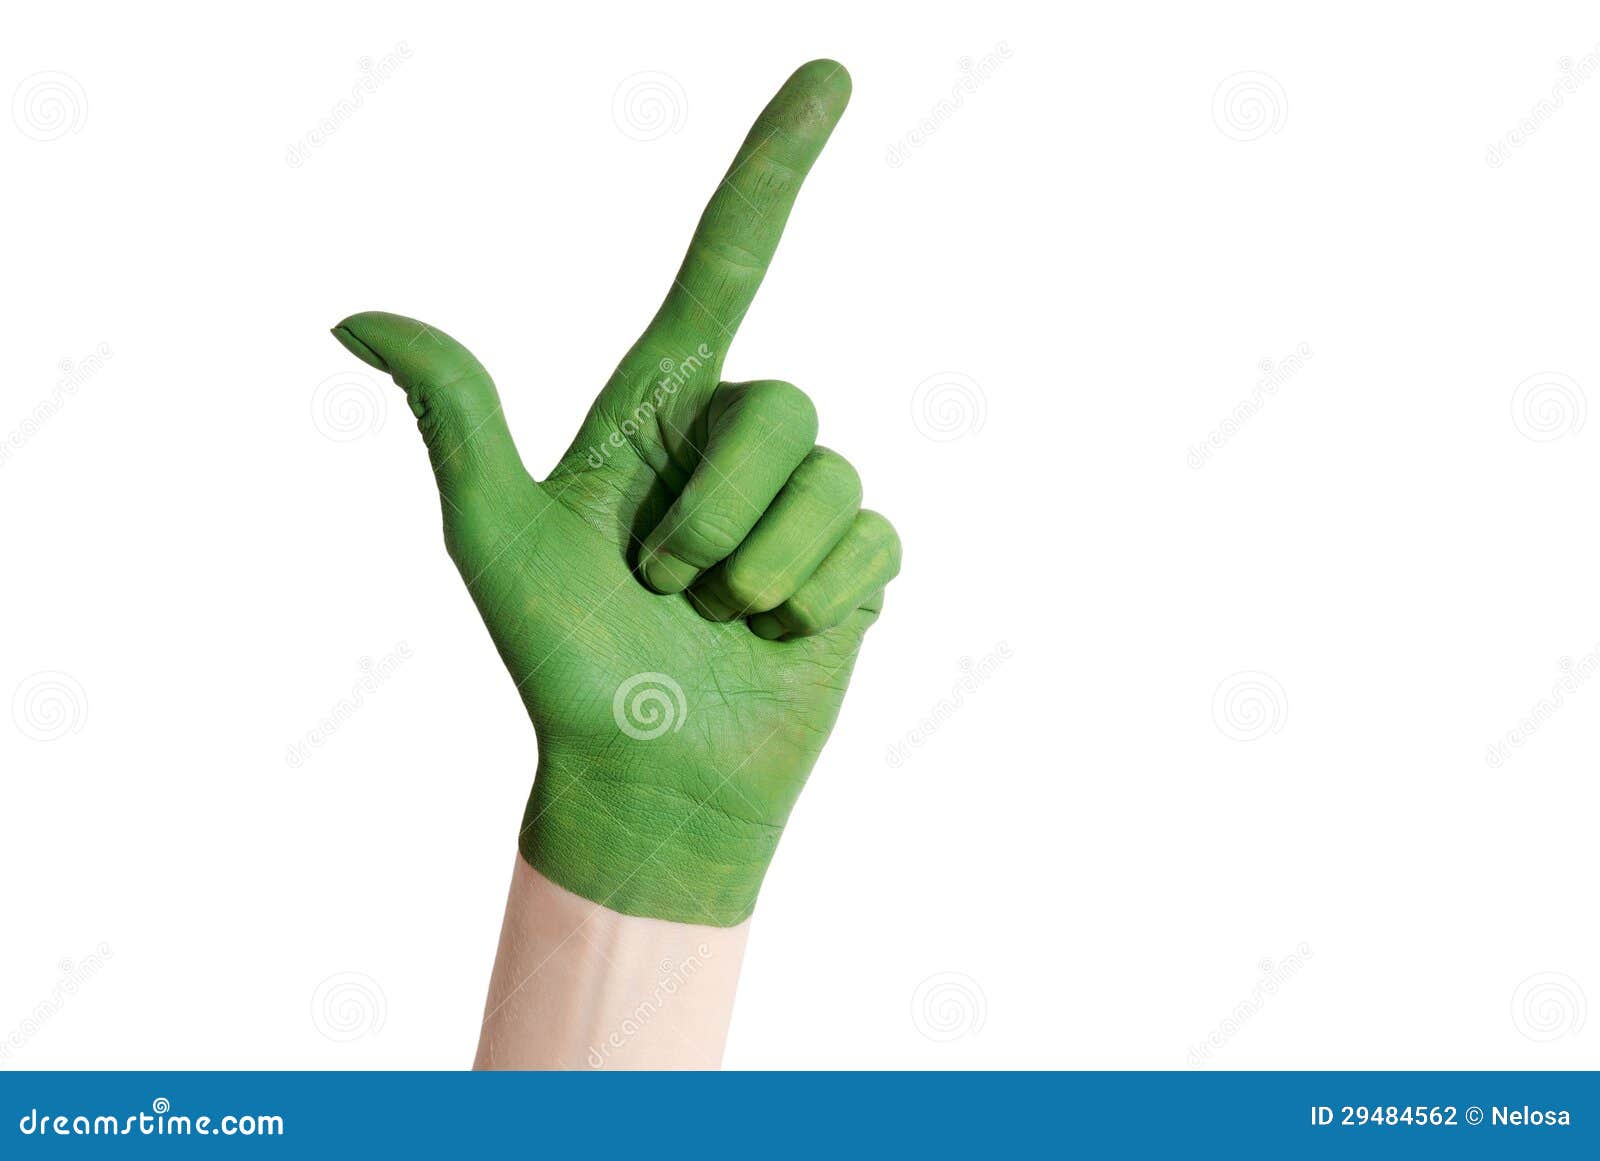 Правая рука зеленая. Зеленые пальцы. Зеленый палец на Лиона. Зеленый большой палец. Зеленая рука на Лиона.